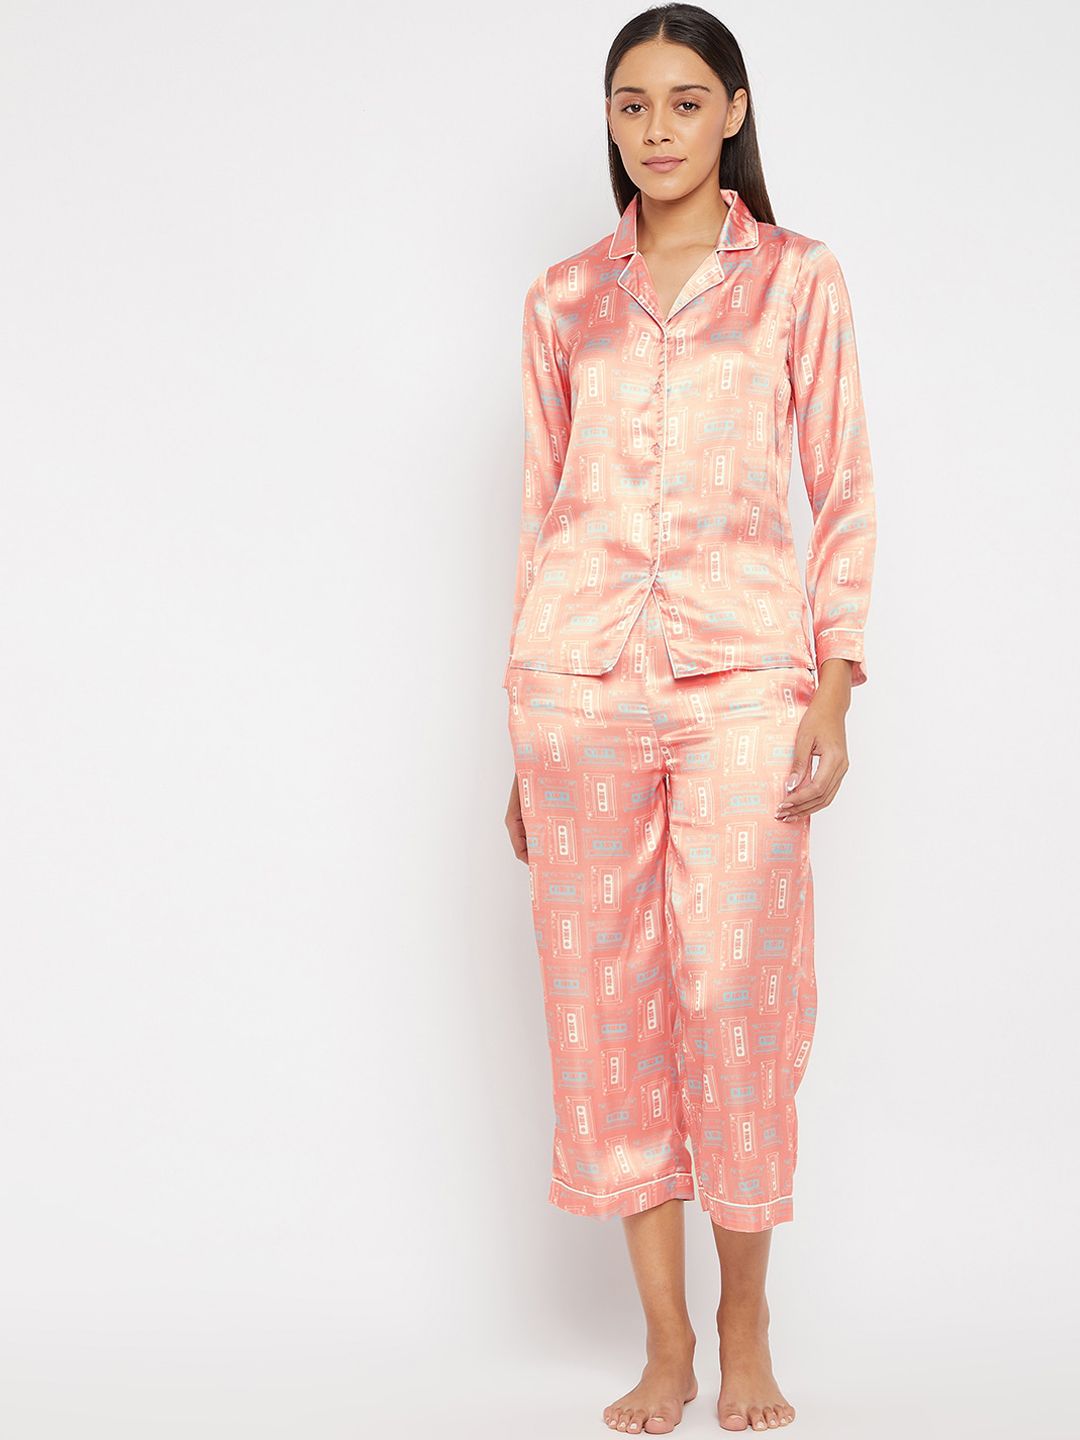 PANIT Women Pink & Beige Printed Night suit Price in India